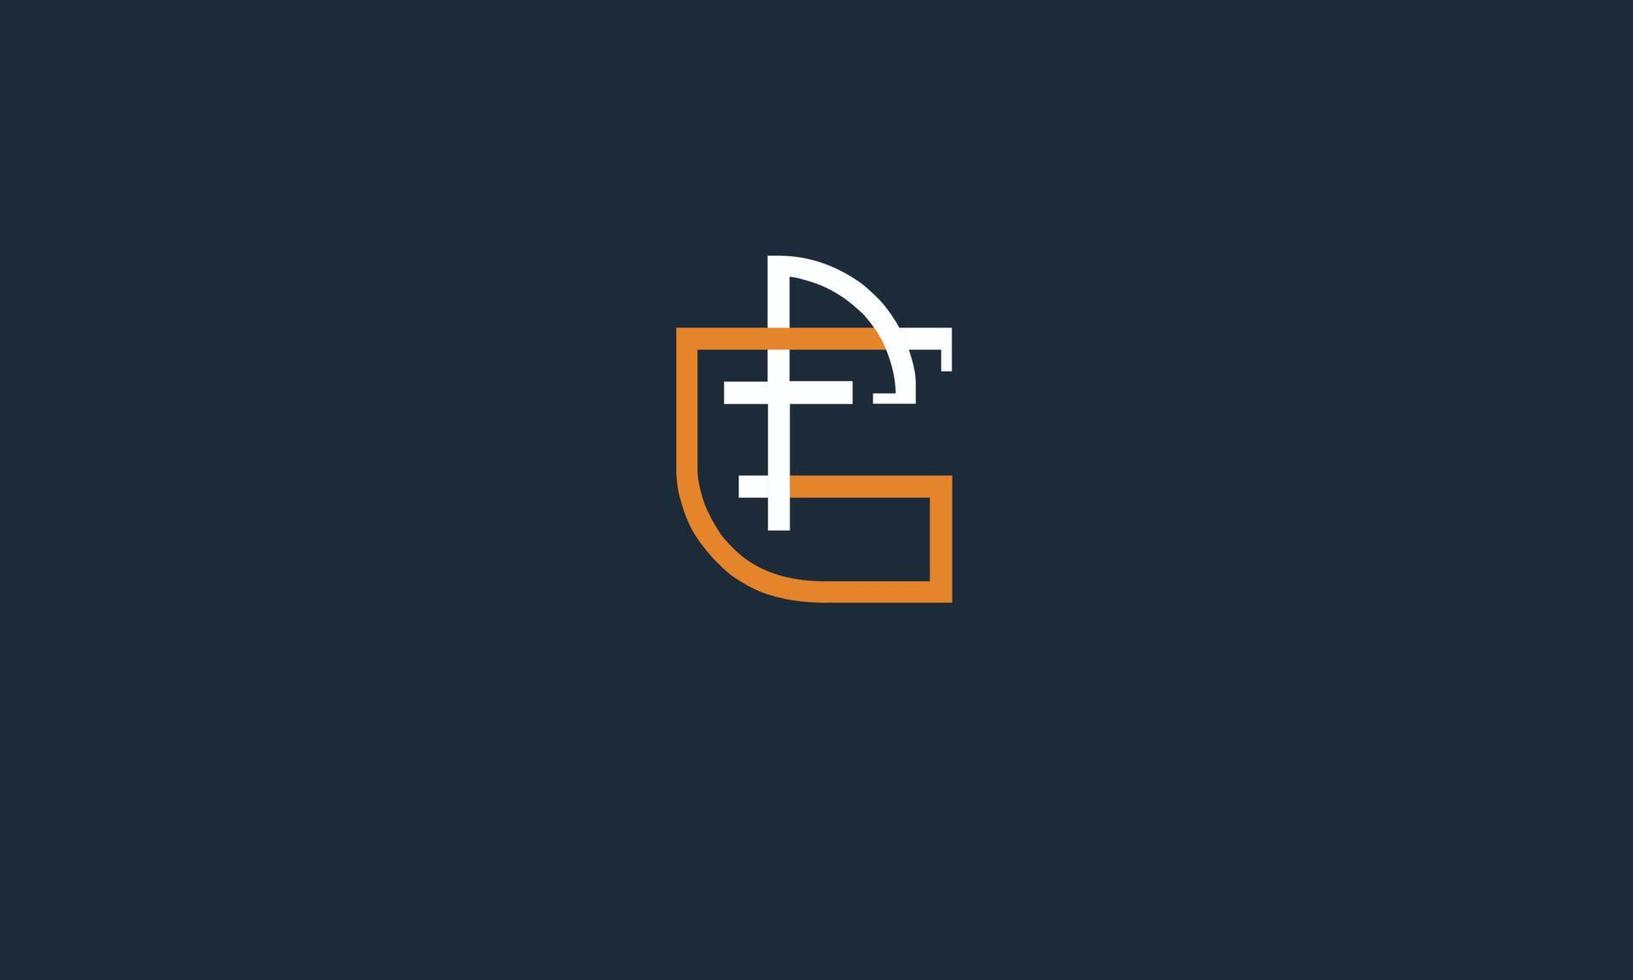 letras do alfabeto iniciais monograma logotipo gf, fg, g e f vetor